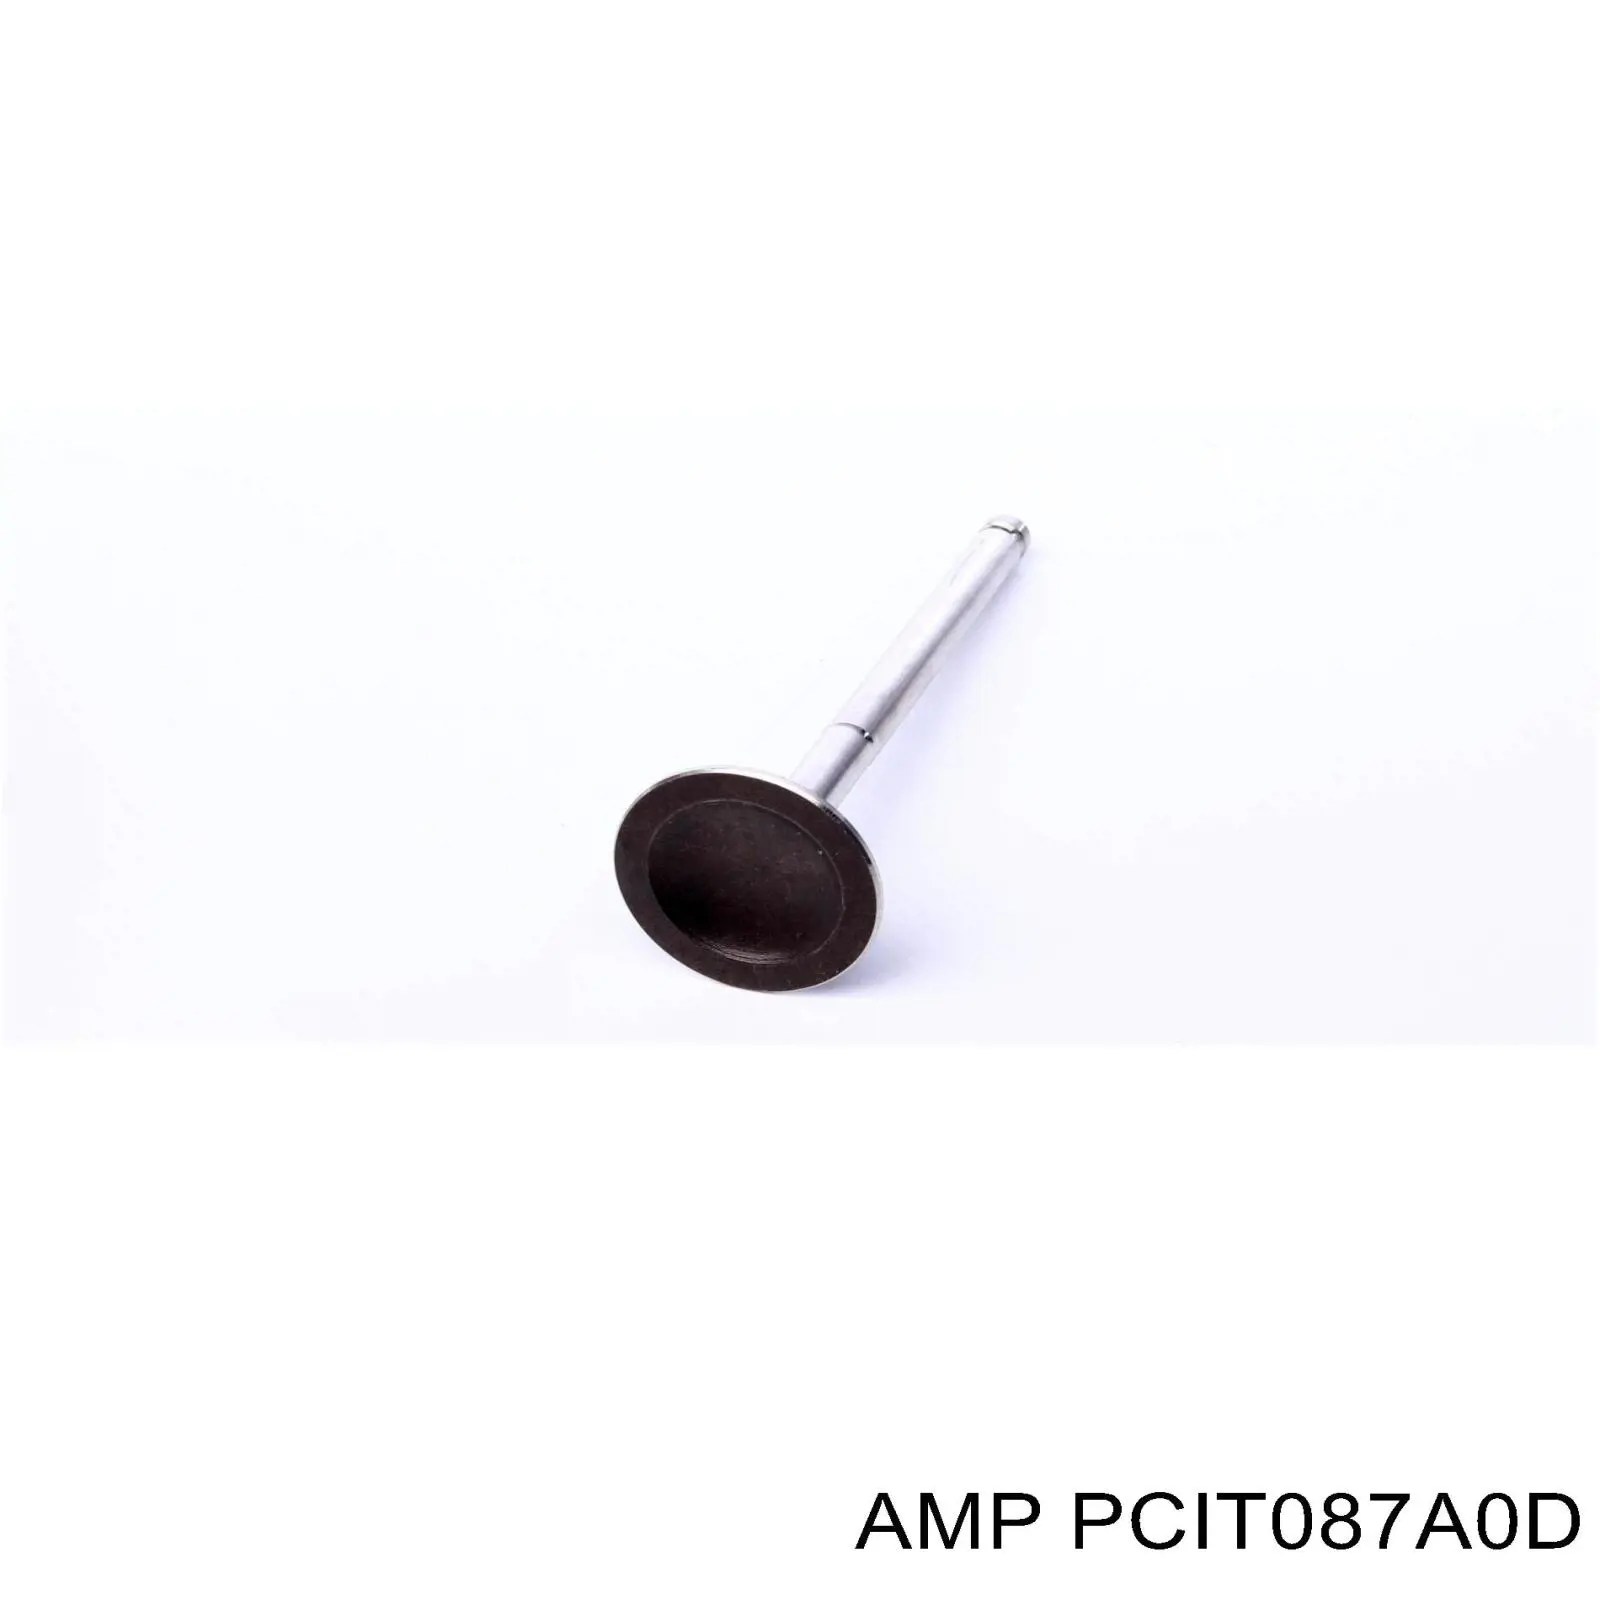 PCIT087-A-0-D AMP/Paradowscy клапан выпускной